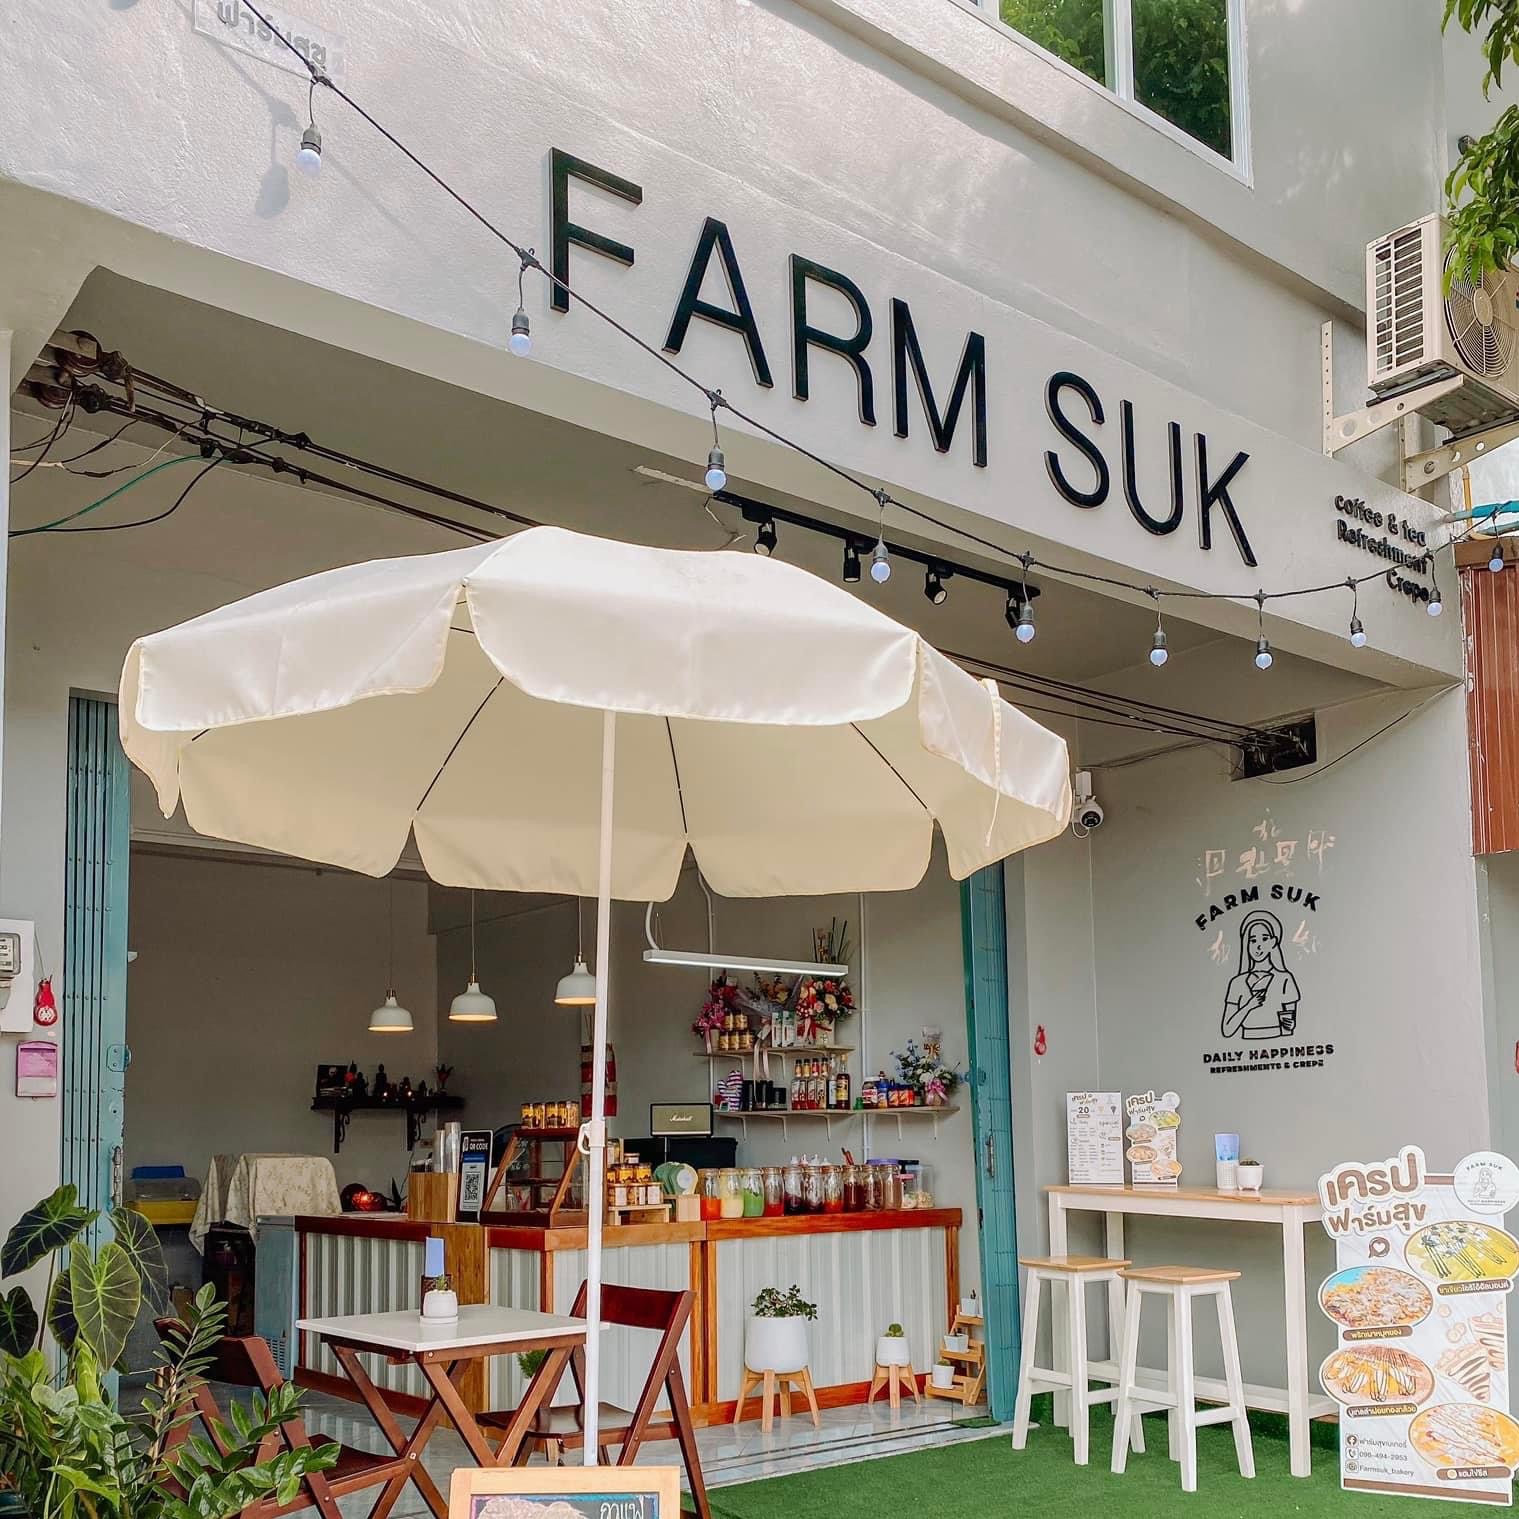 Farm Suk Crepe & Coffee @Trang